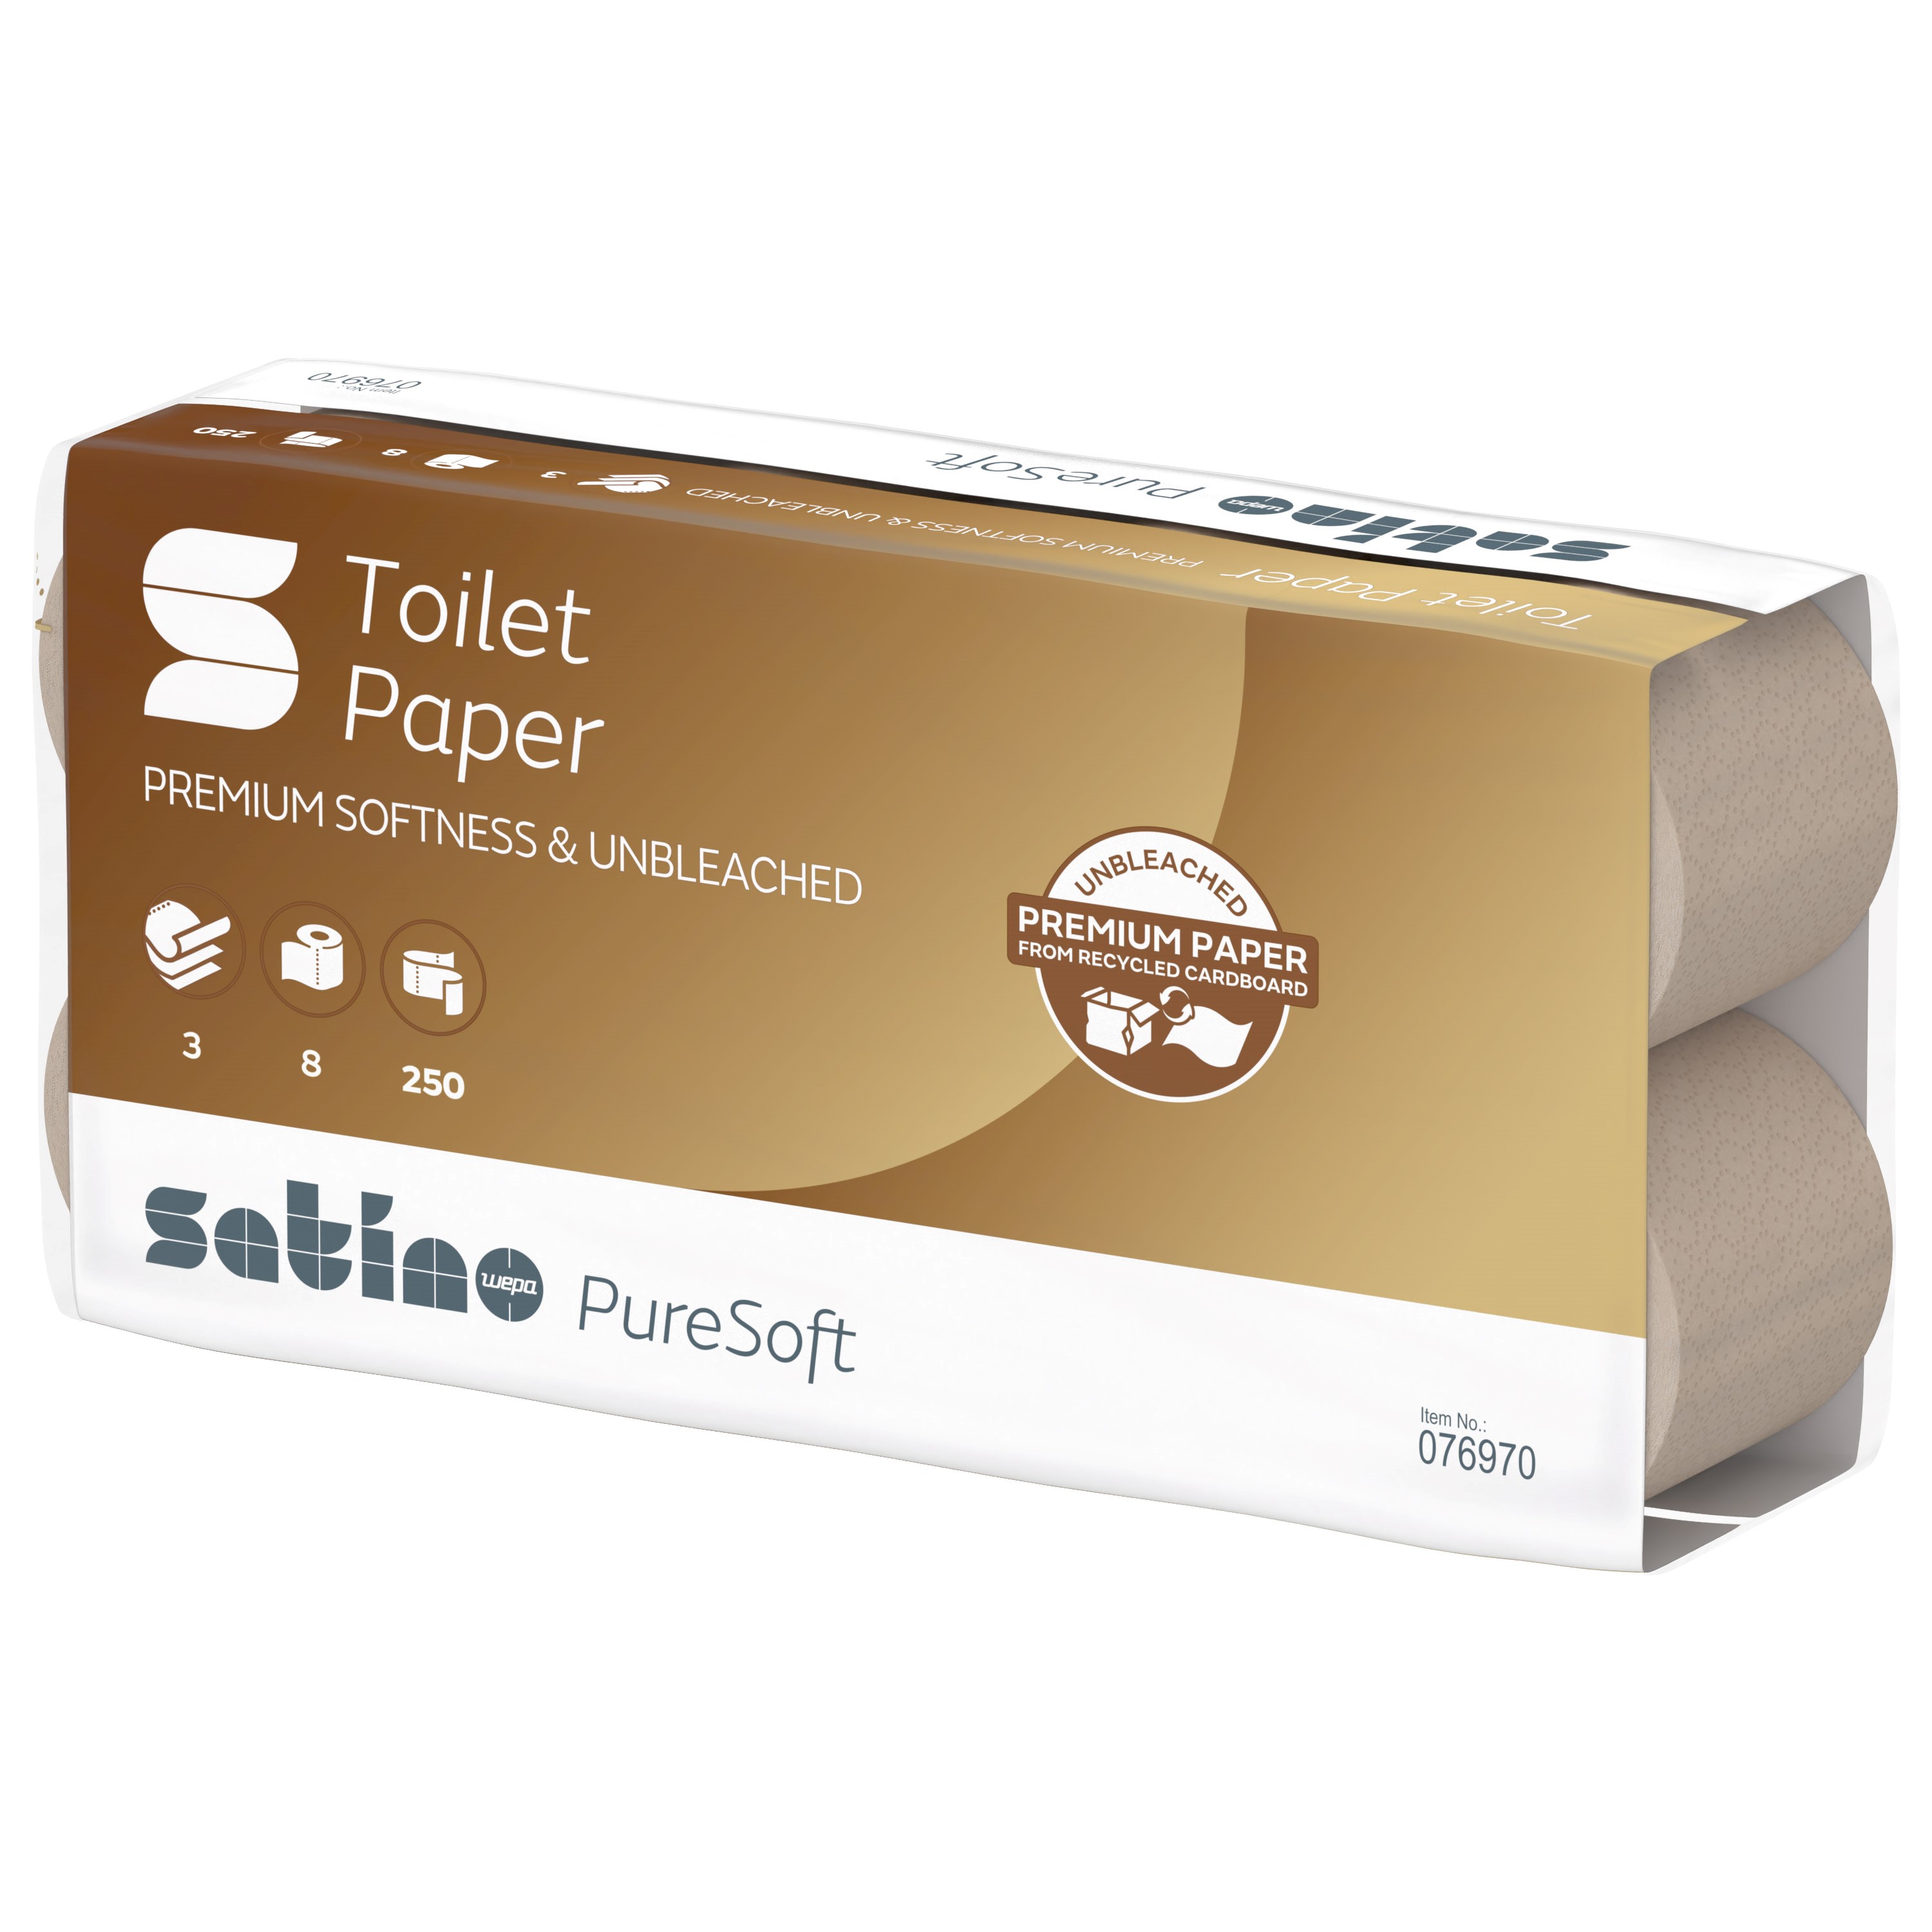 Produktbild: Toilettenpapier 3lg soft beige RC satino PureSoft 33 Sack (Palette)